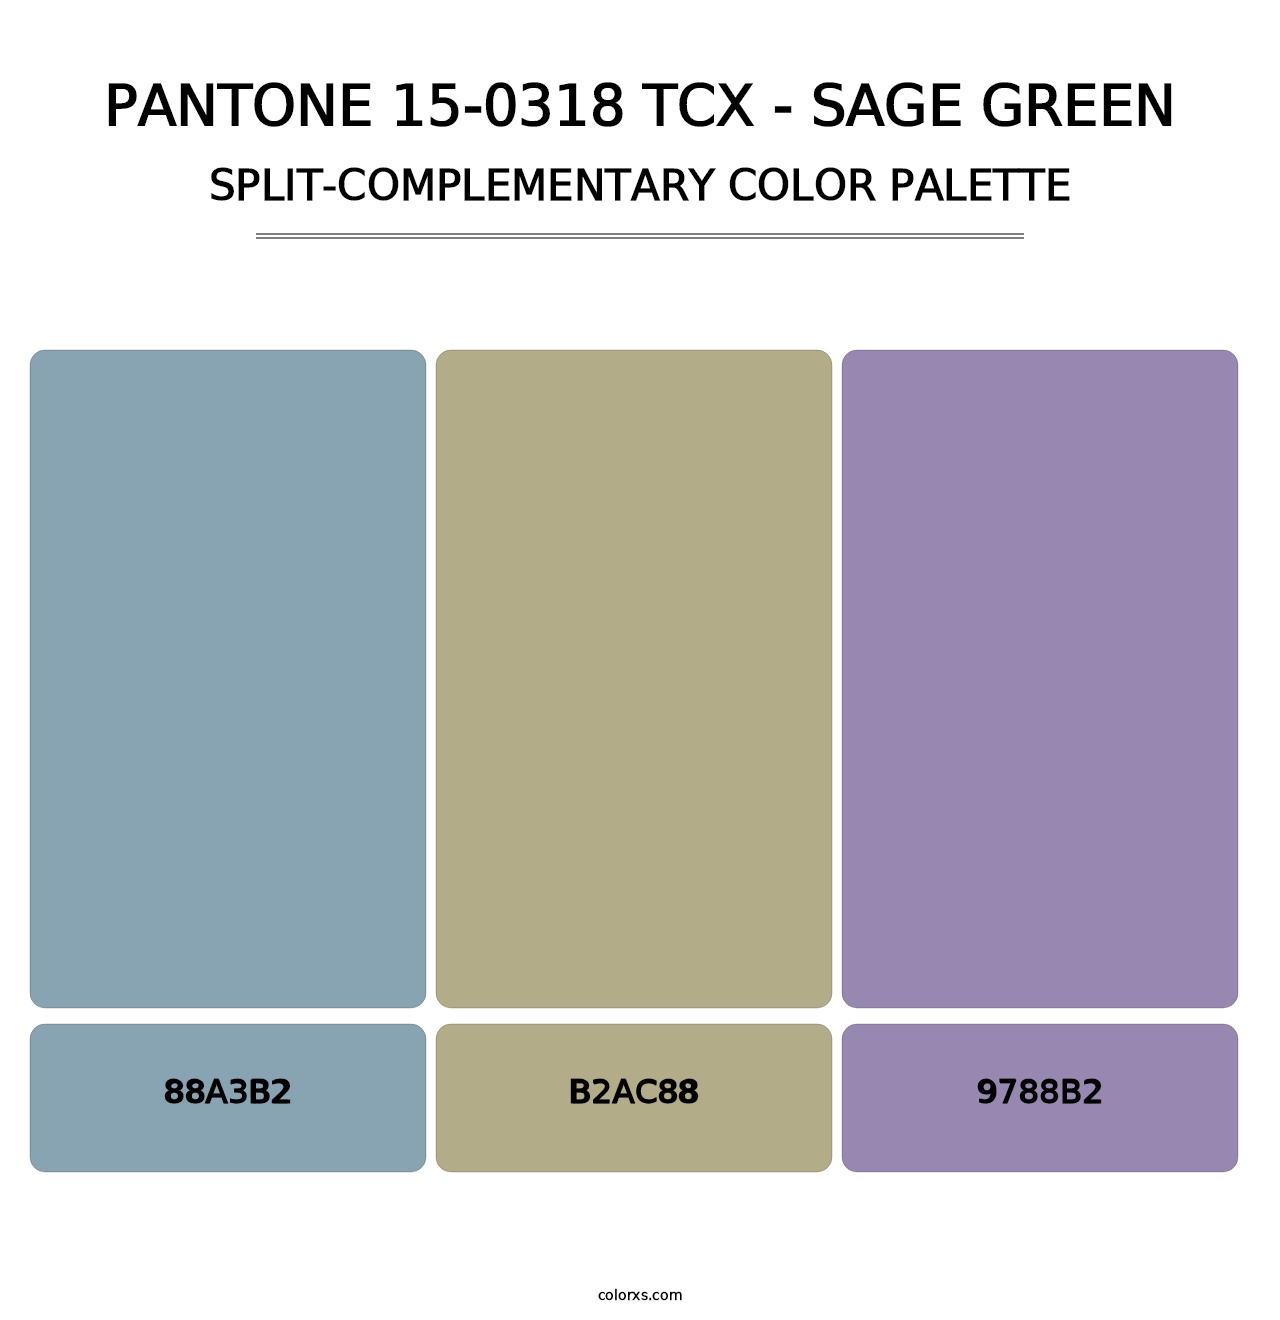 PANTONE 15-0318 TCX - Sage Green - Split-Complementary Color Palette